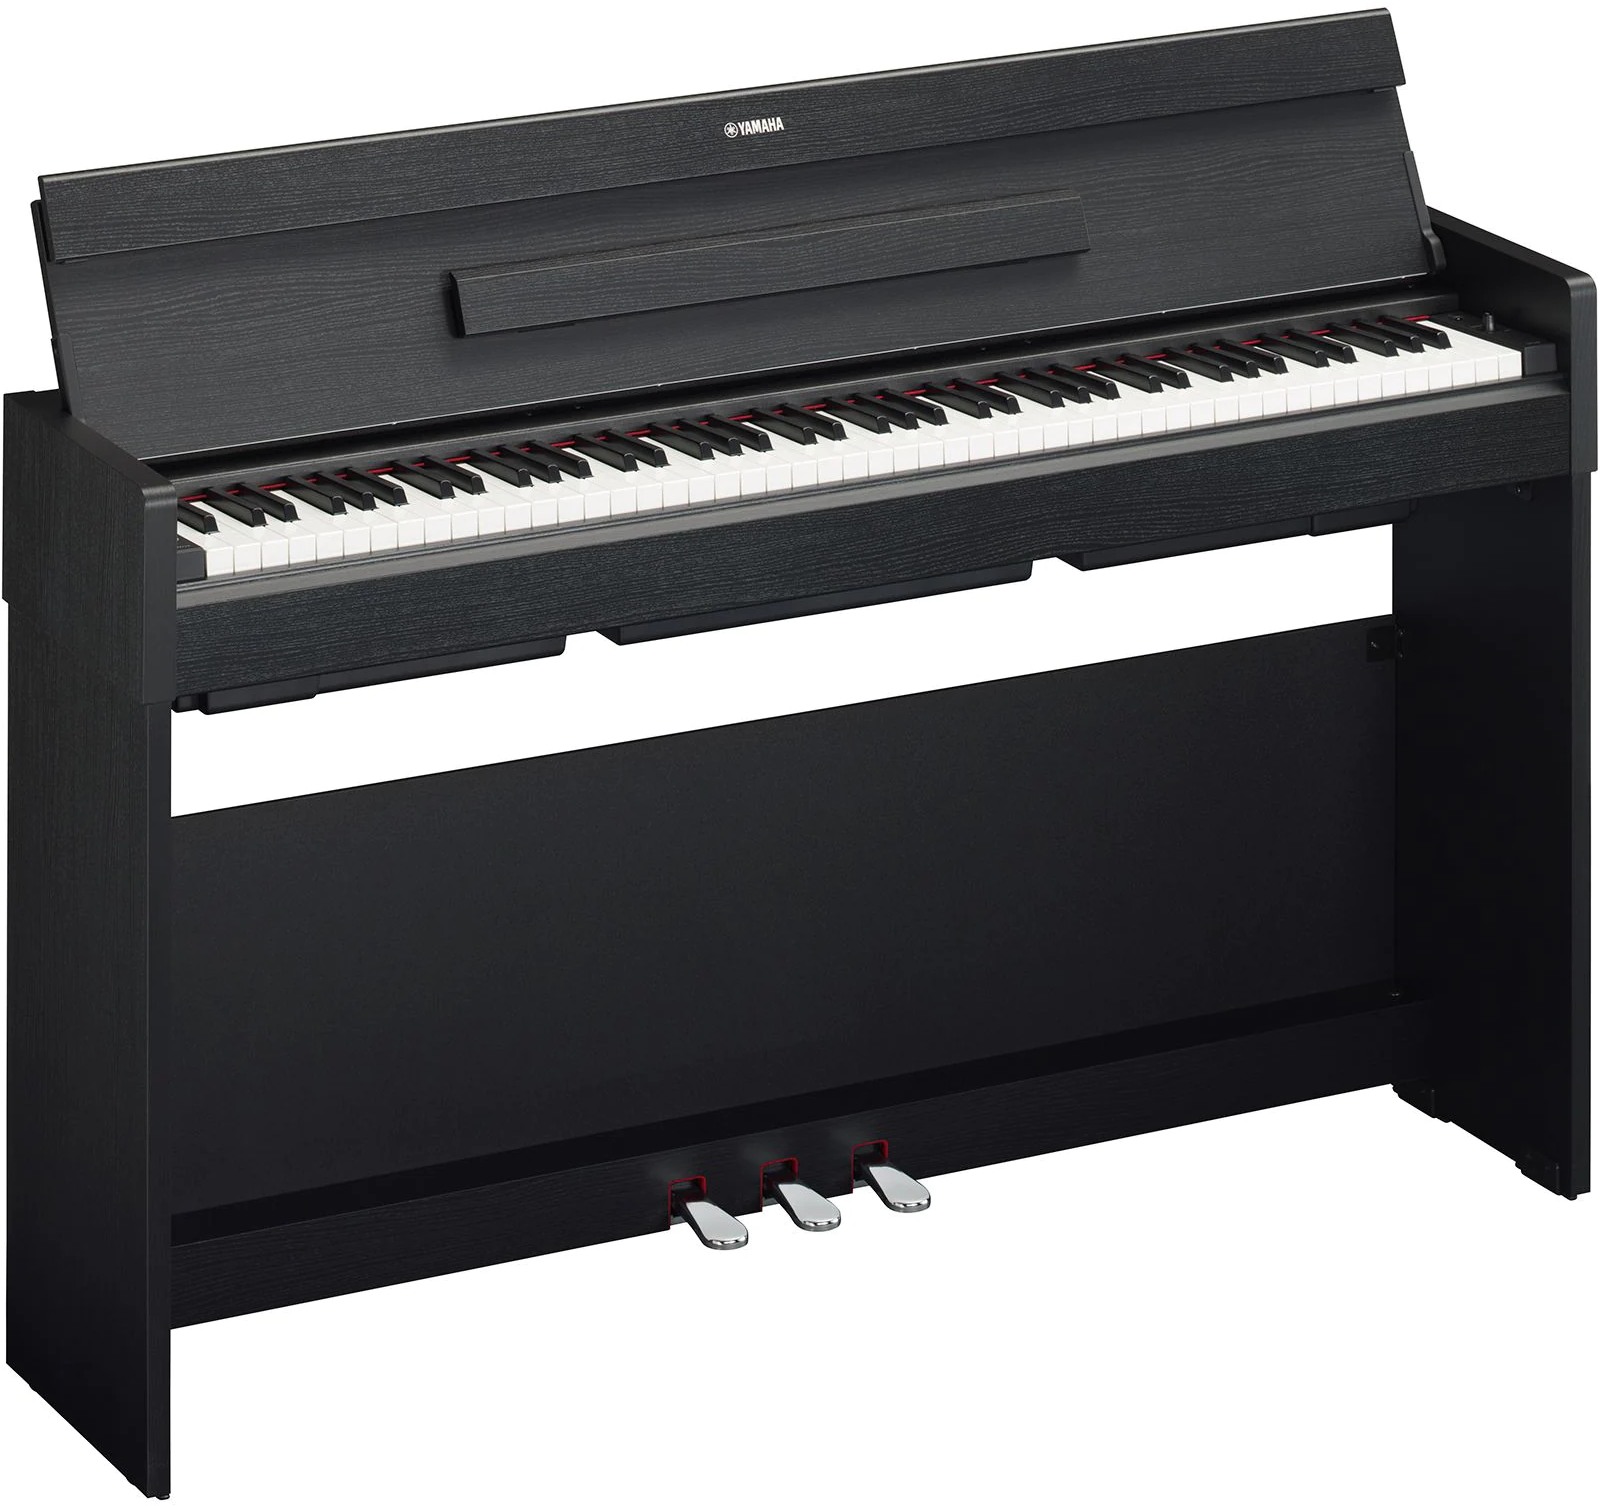 Yamaha Ydp-s35 B - Digitalpiano mit Stand - Variation 1